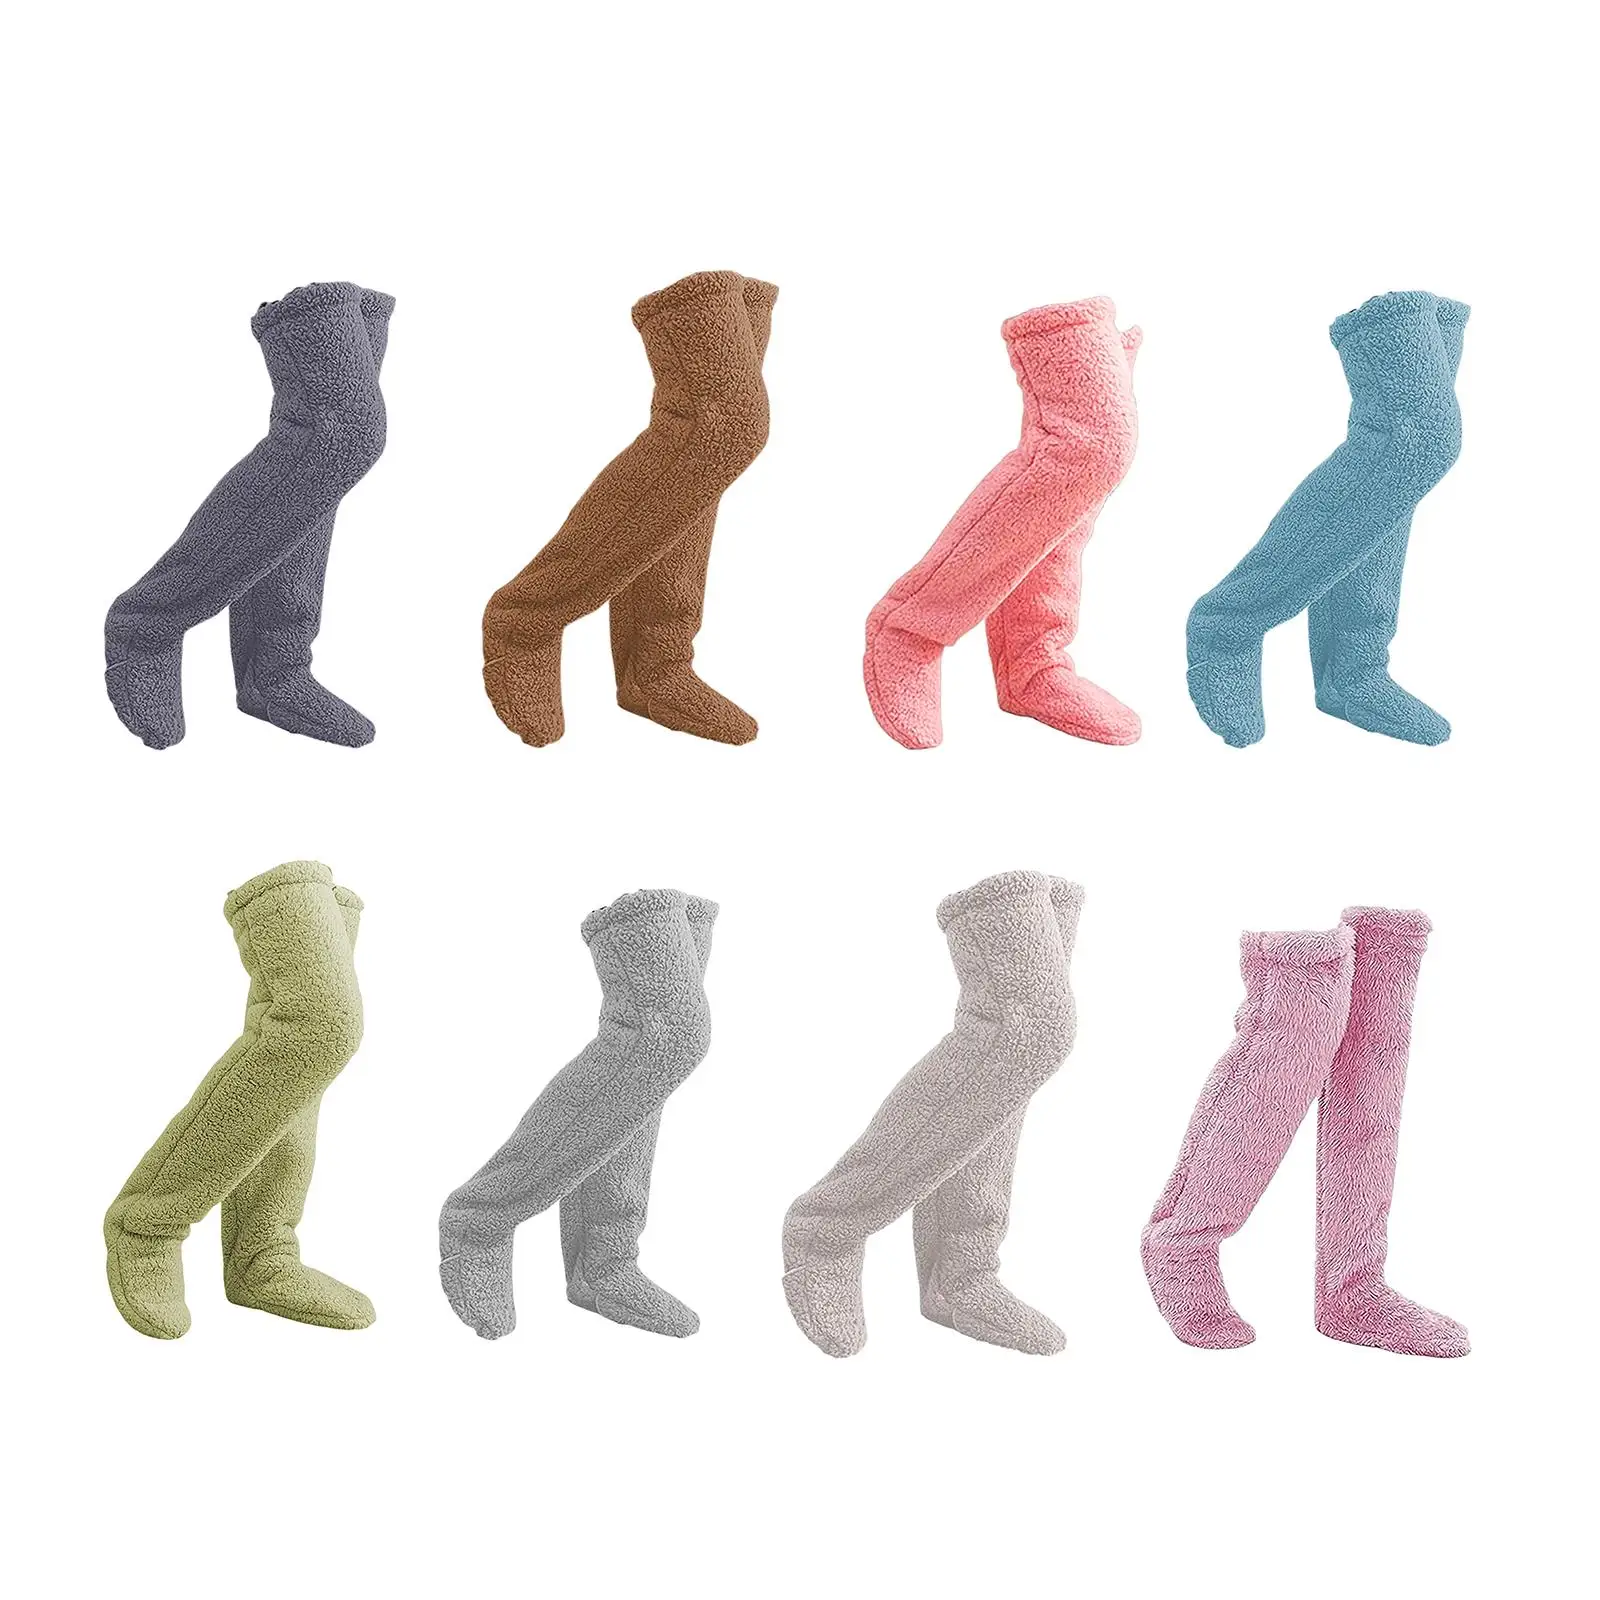 Thigh High Socks for Women Soft Long Tube Stockings Fleece Plush Leg Warmers